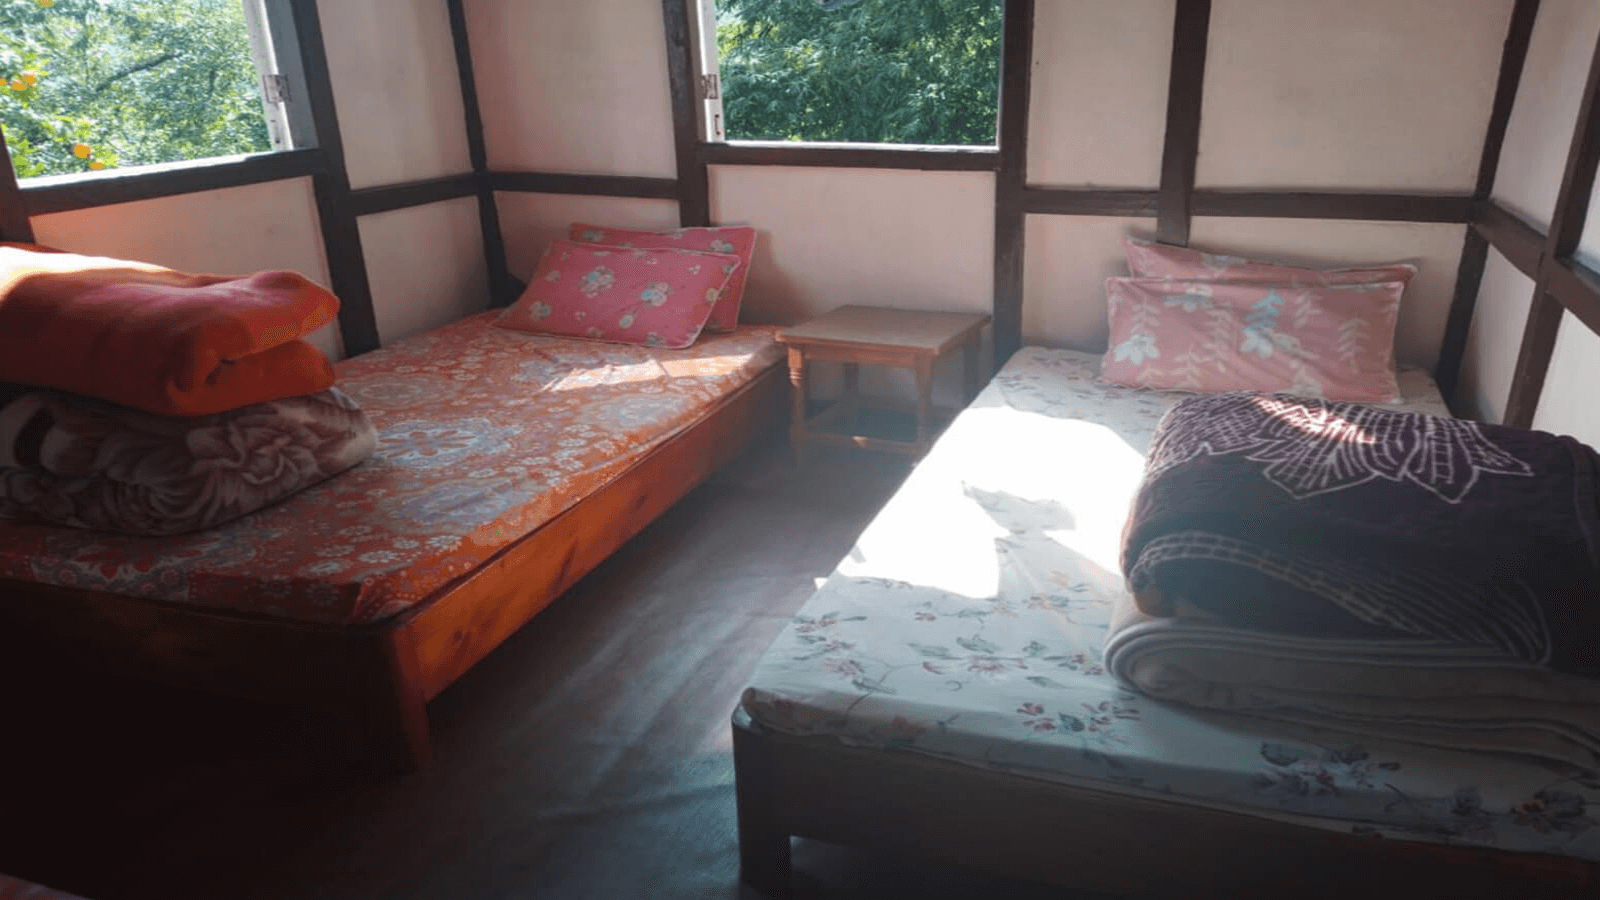 Standard Double Bed Room